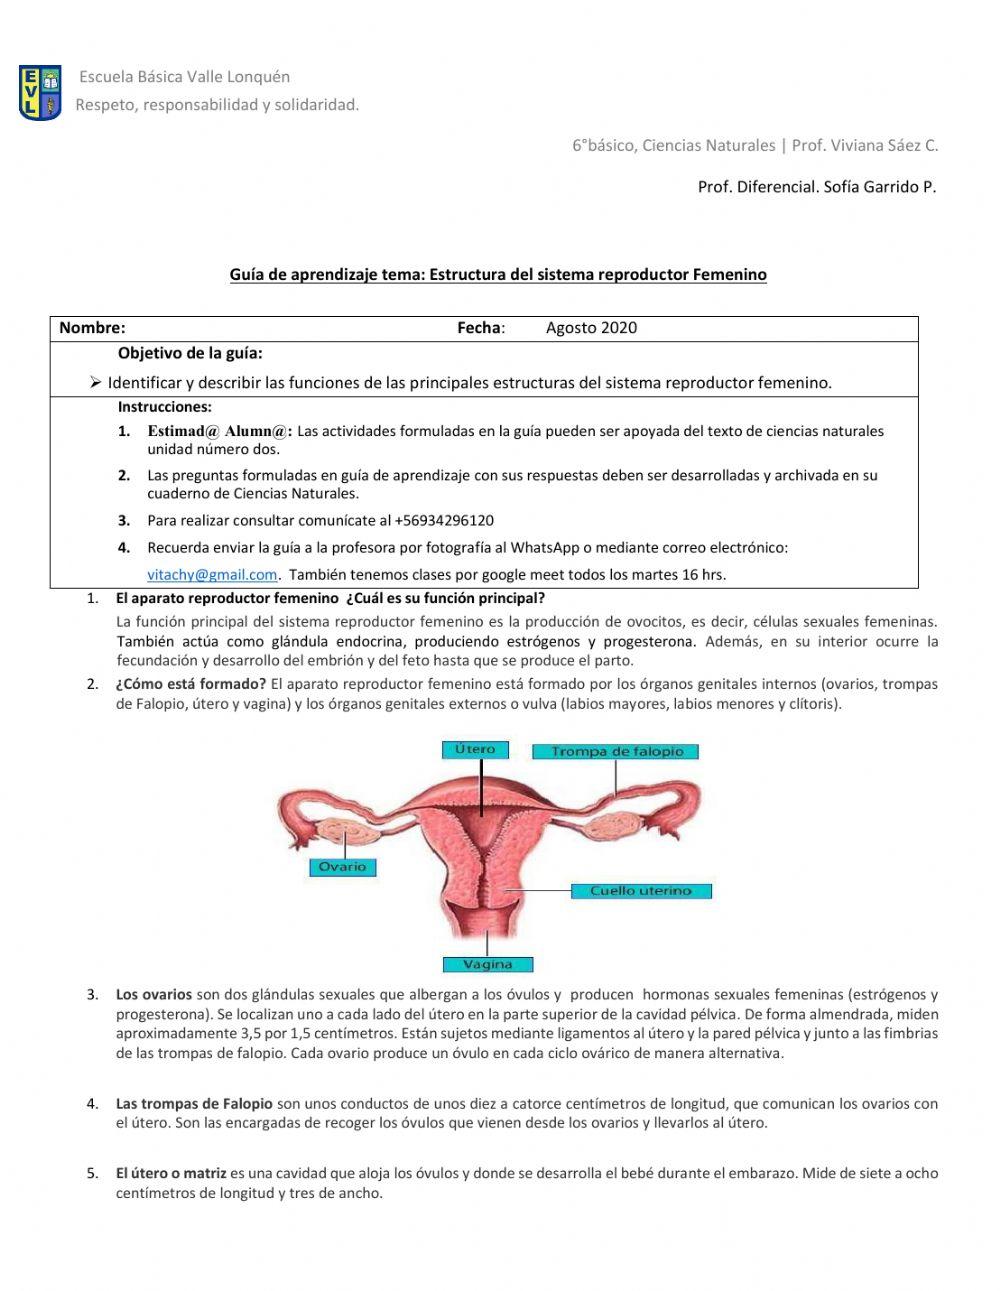 Sistema reproductor femenino